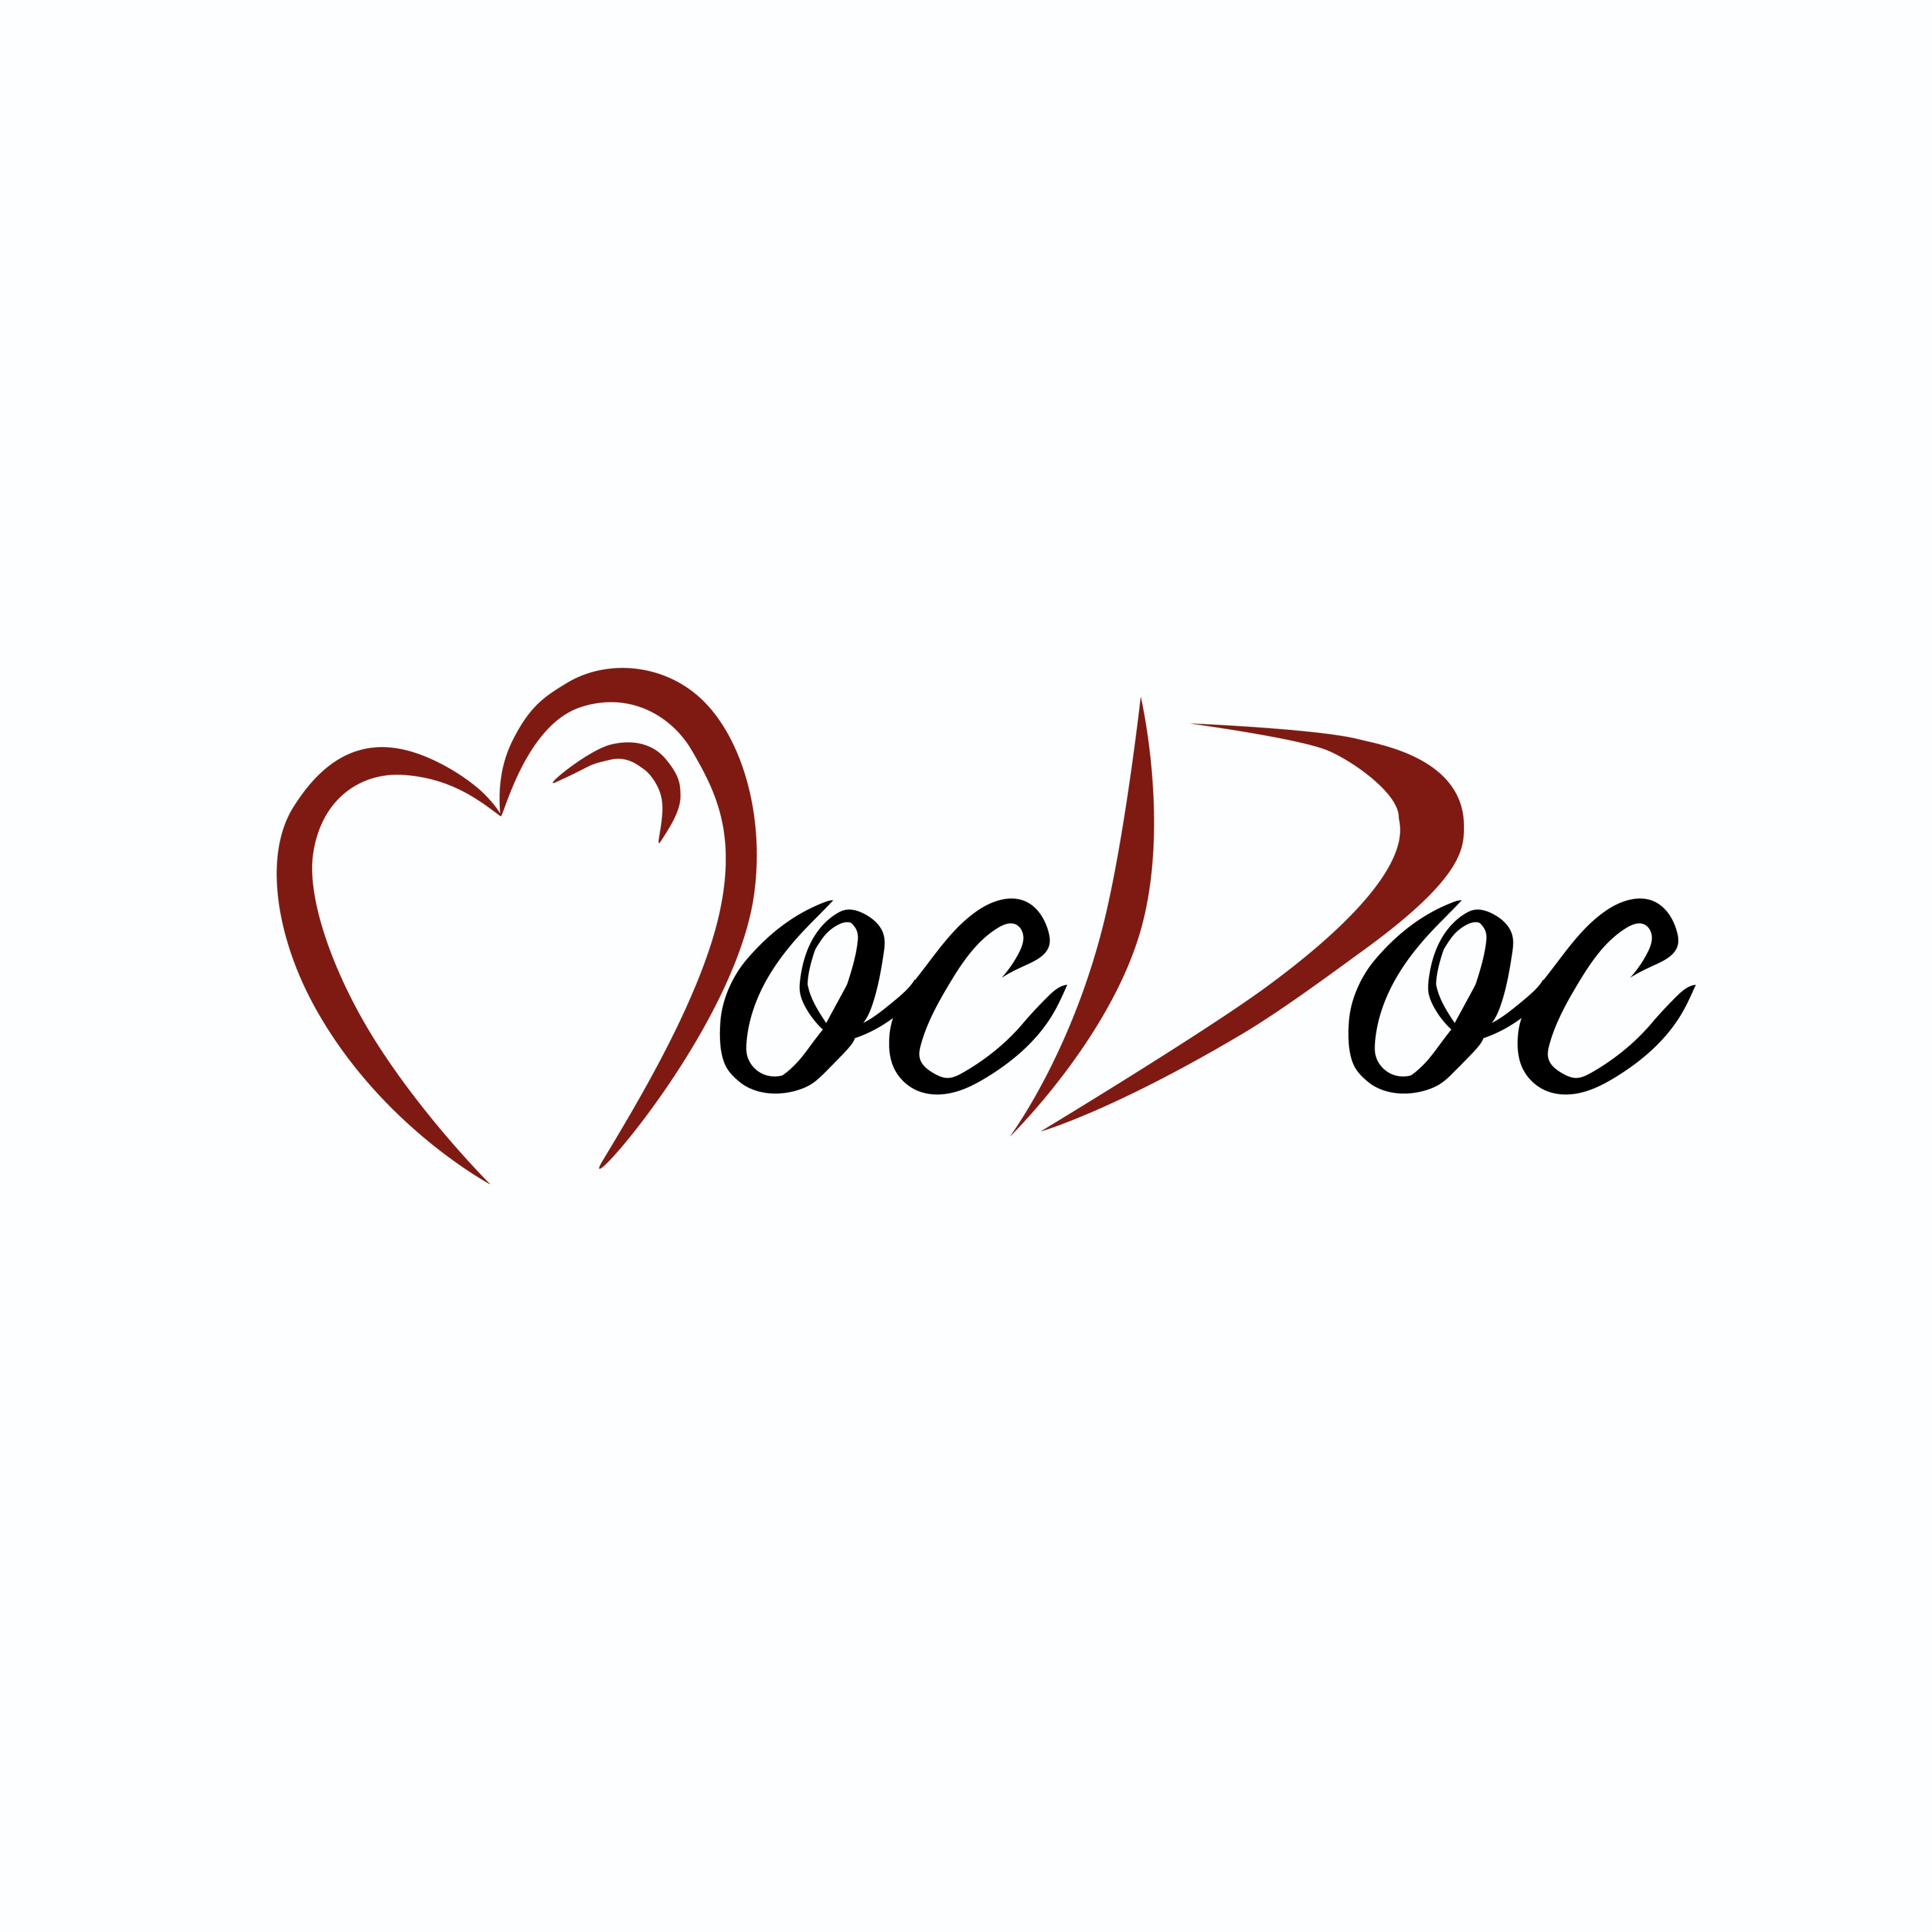 MocDoc|Veterinary|Medical Services